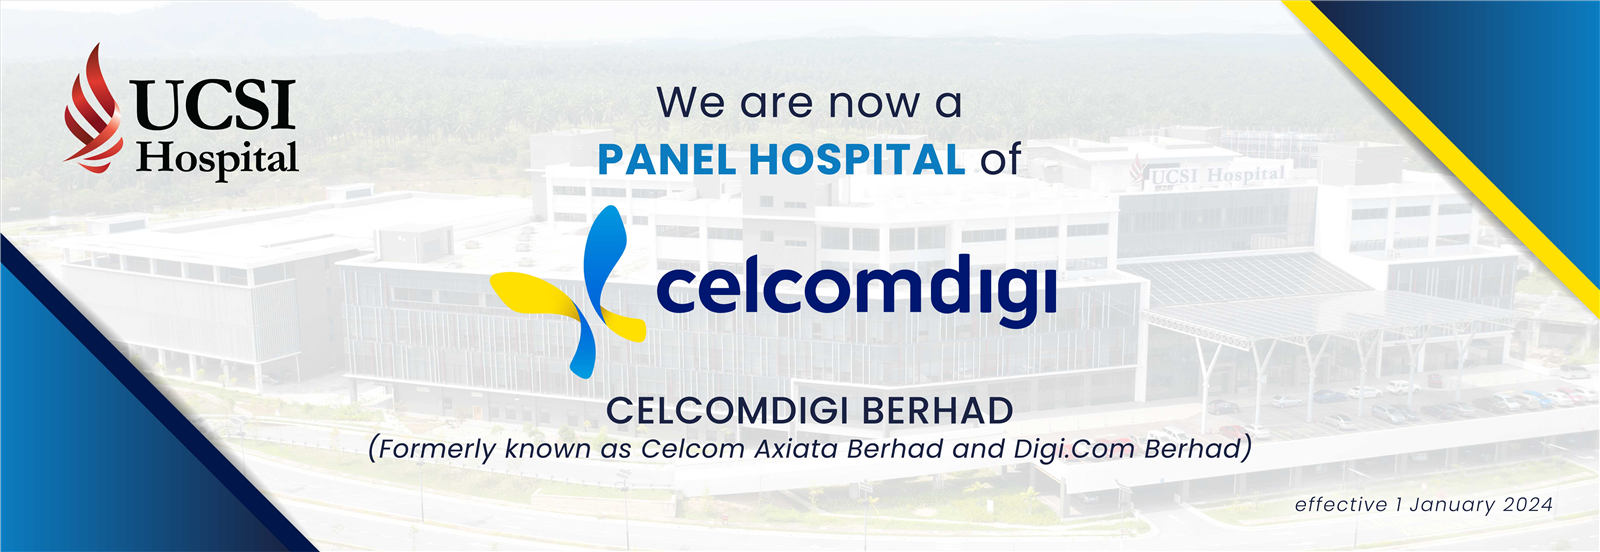 CelcomDigi Panel